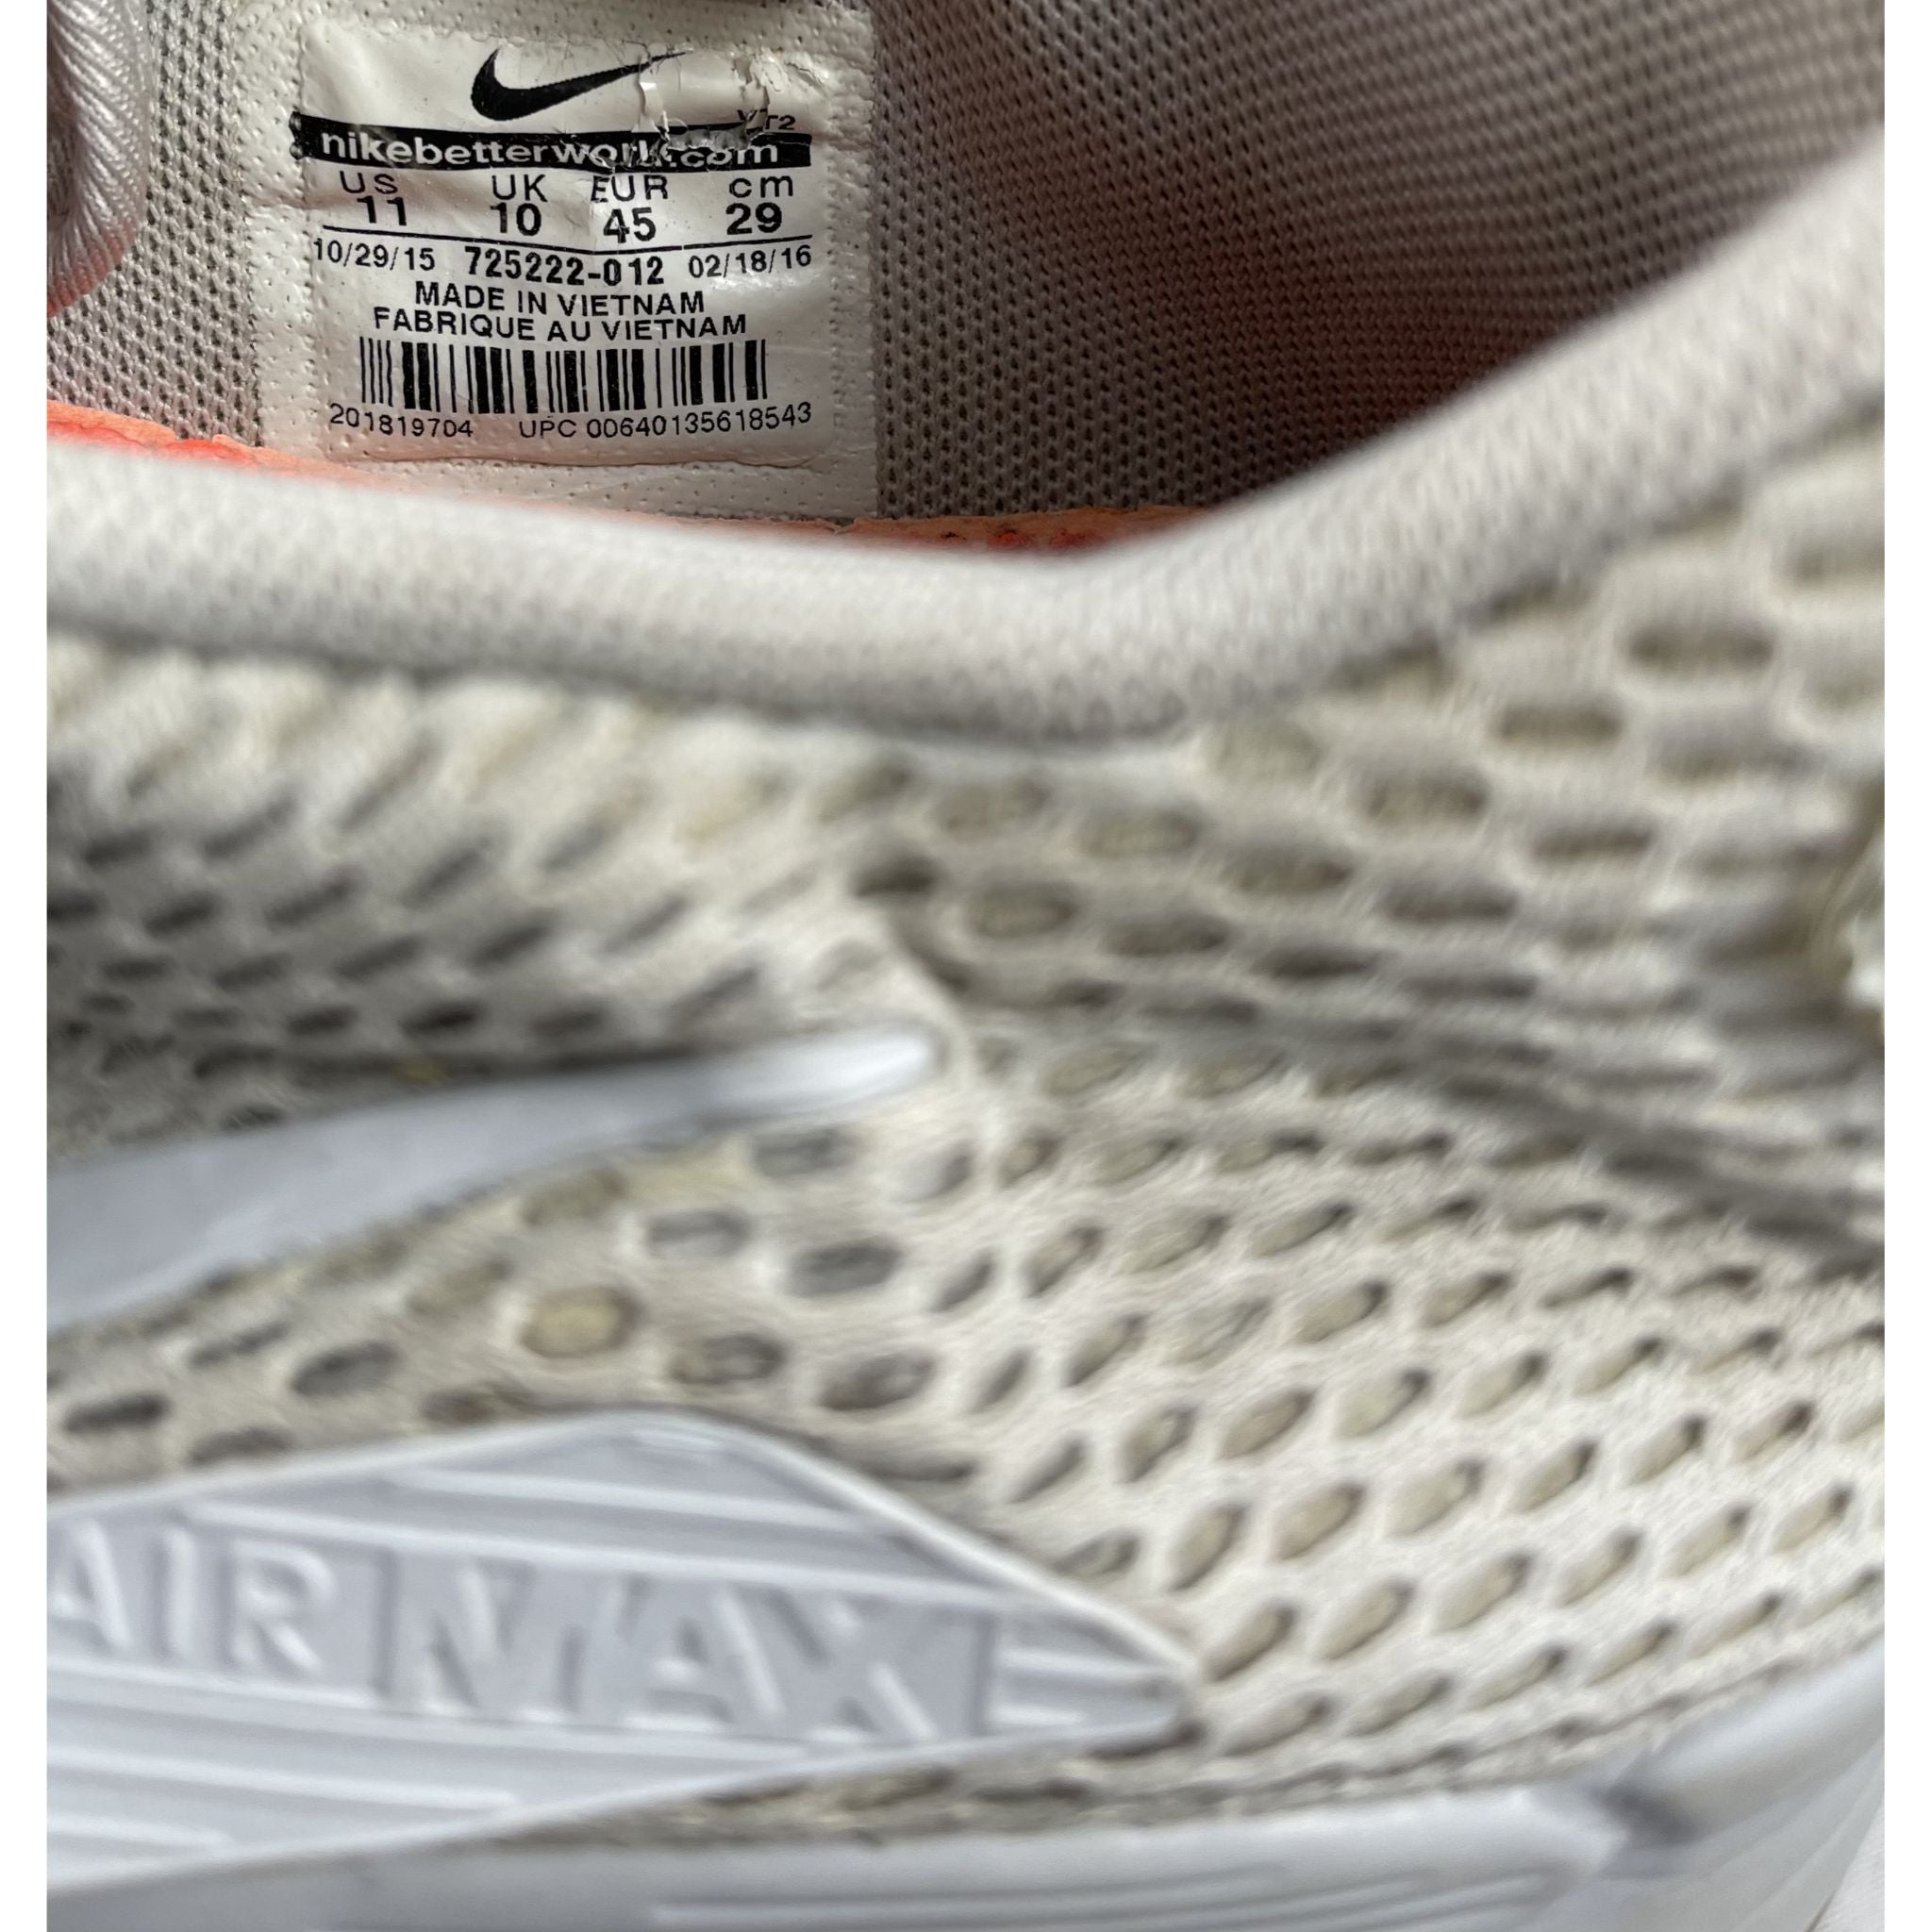 Gray Nike Sneakers